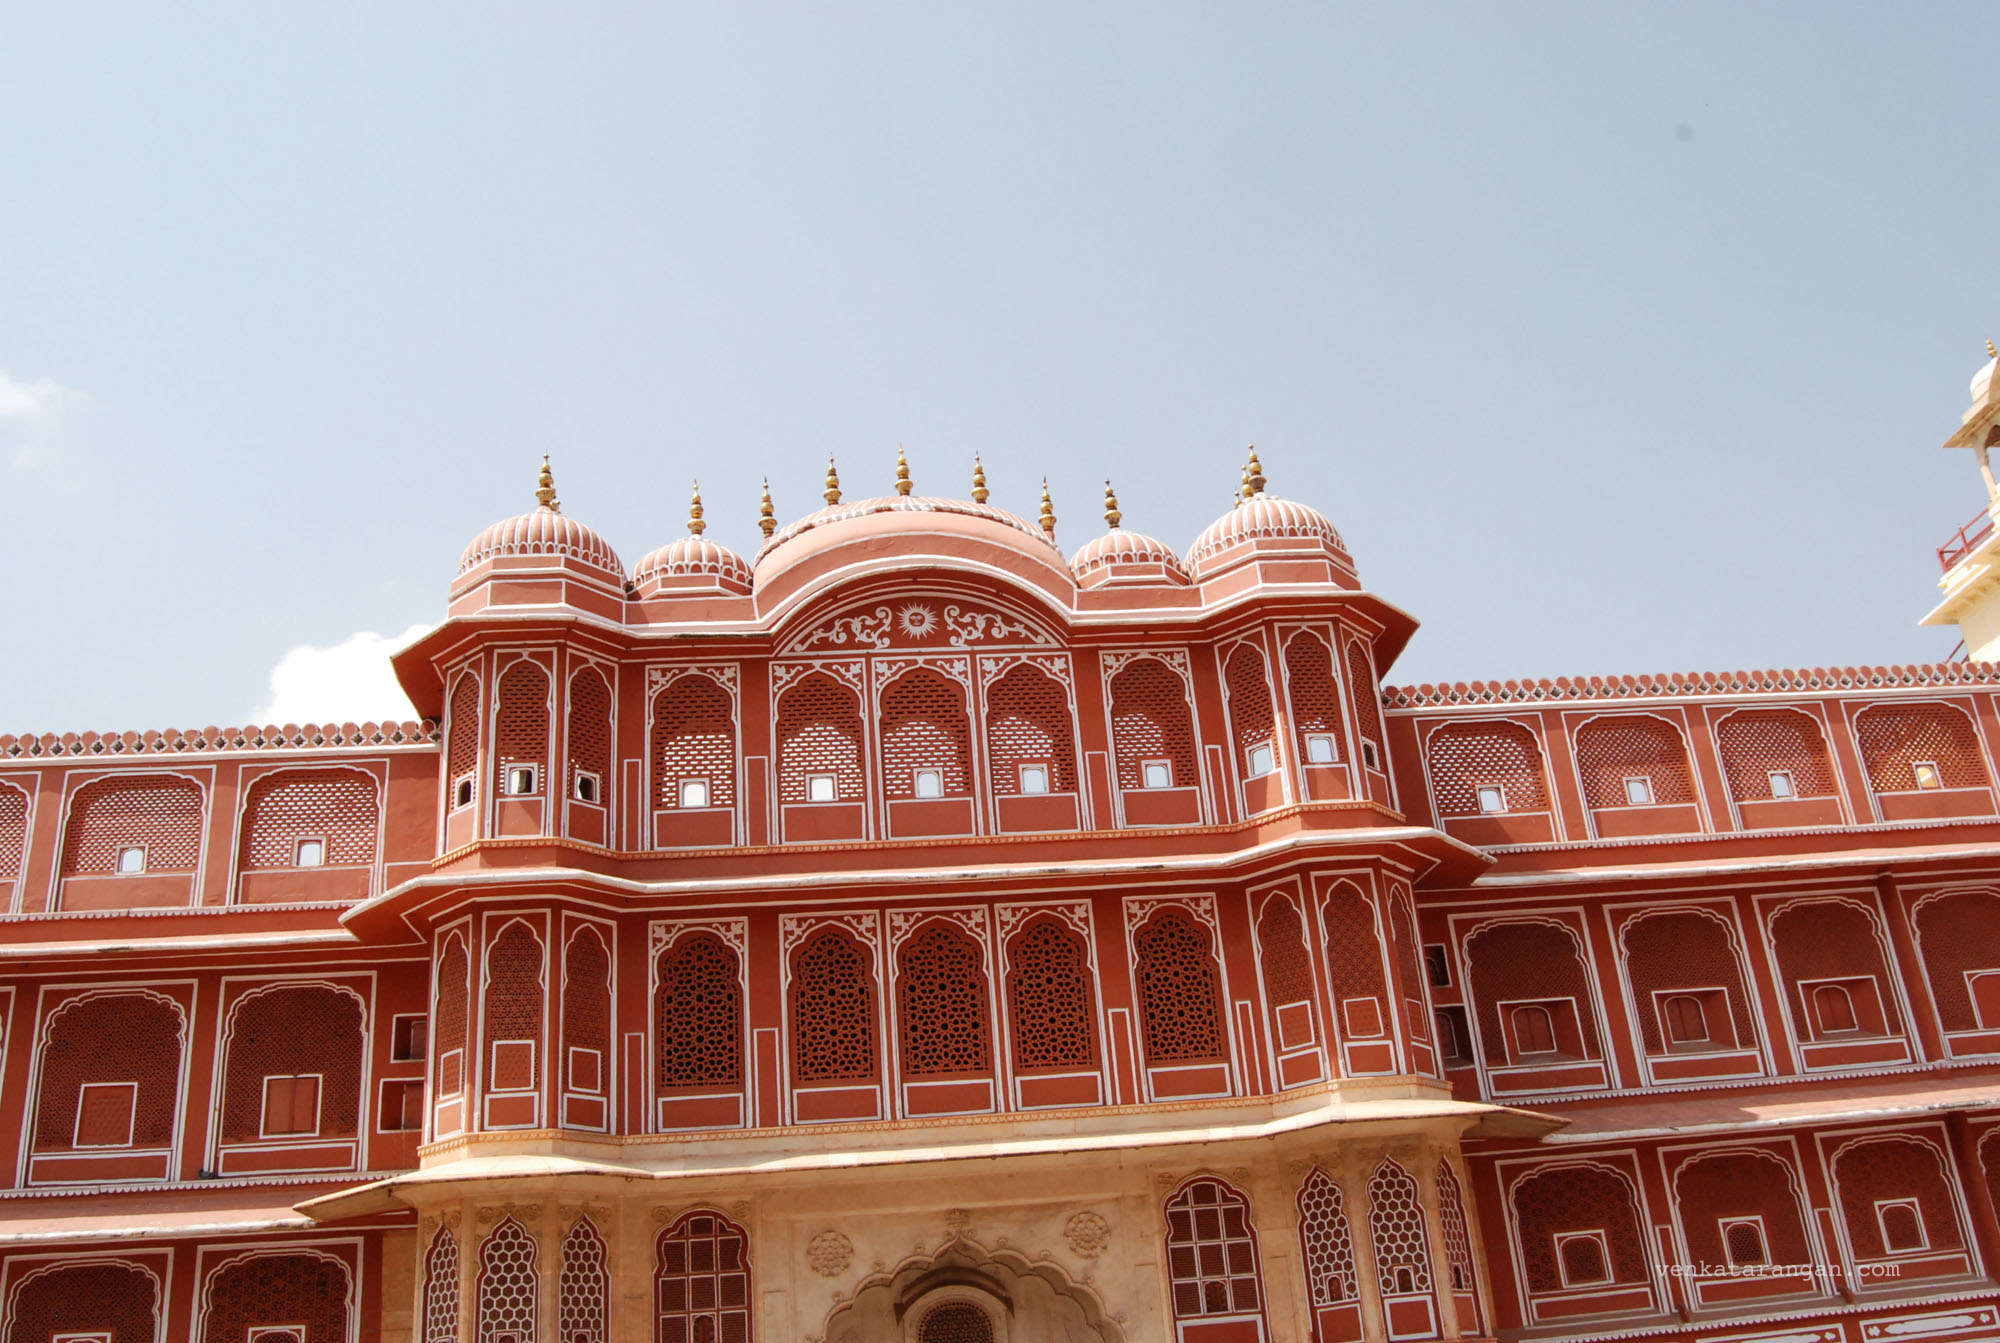 Notes on my Jaipur trip